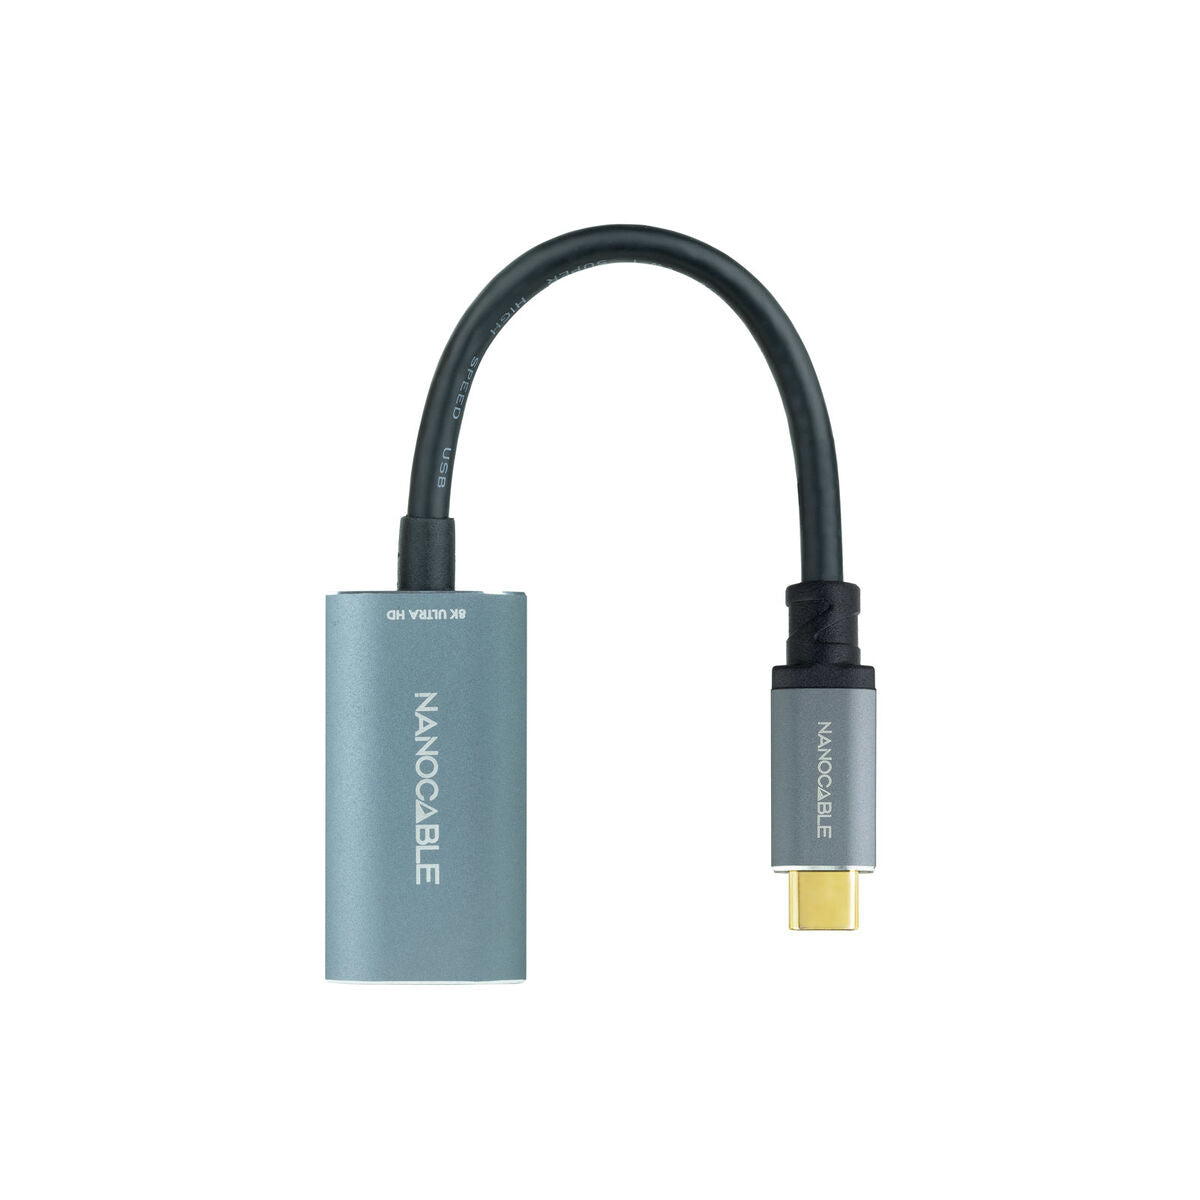 USB-C to DisplayPort Adapter NANOCABLE 10.16.4104-G Grey 15 cm 8K Ultra HD